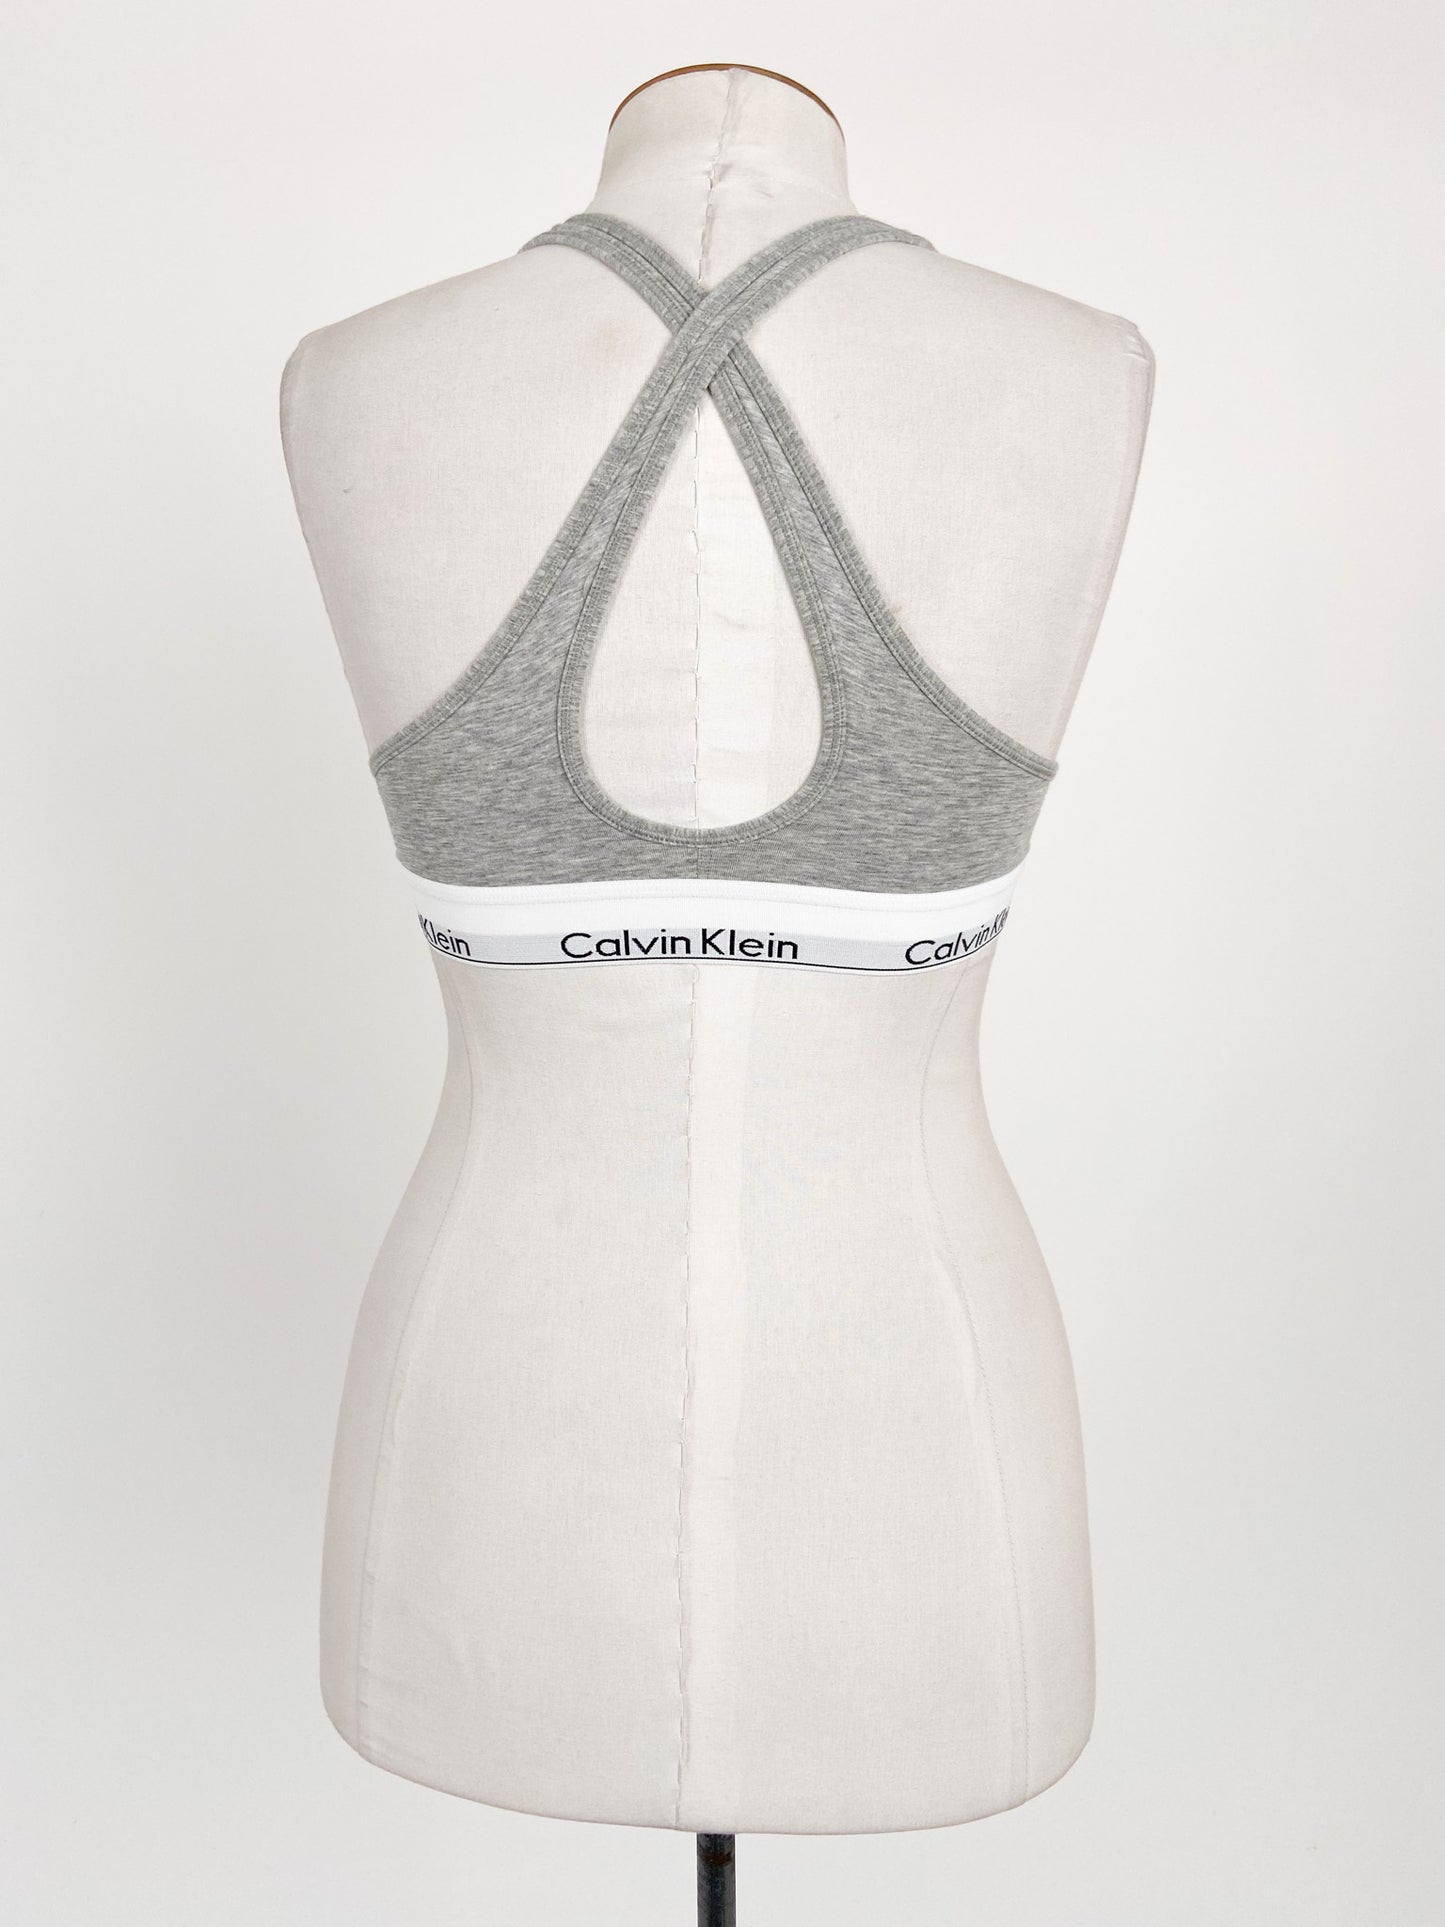 Calvin Klein | Grey Lingerie Top | Size M